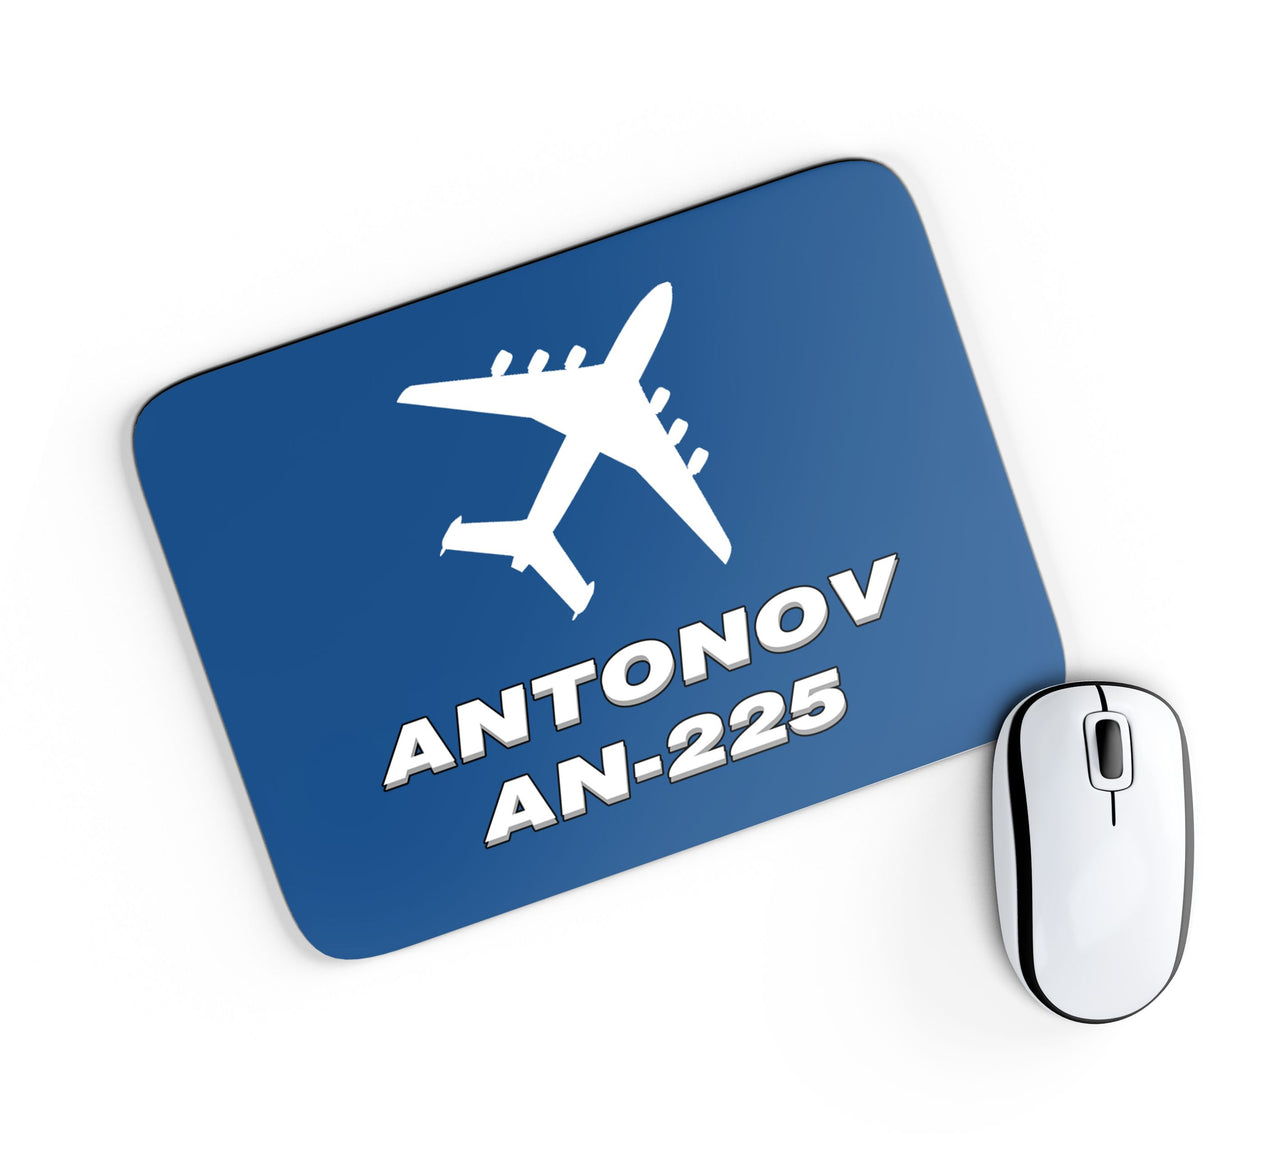 Antonov AN-225 (28) Designed Mouse Pads